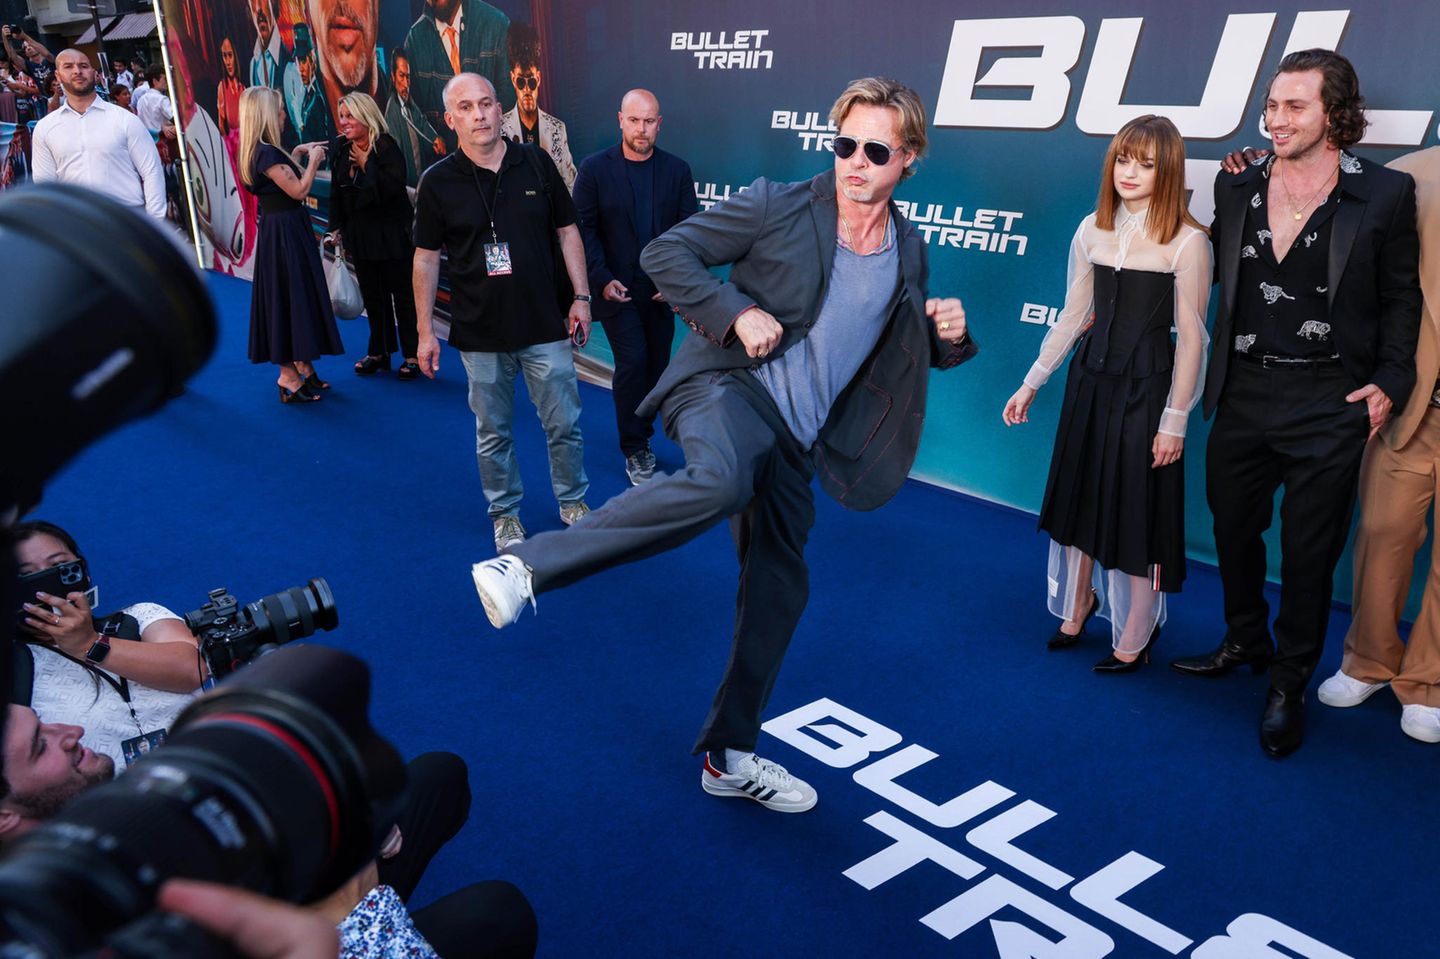 Wer sonst noch so feiert: Brad Pitt kickt in Richtung der Fotografen.